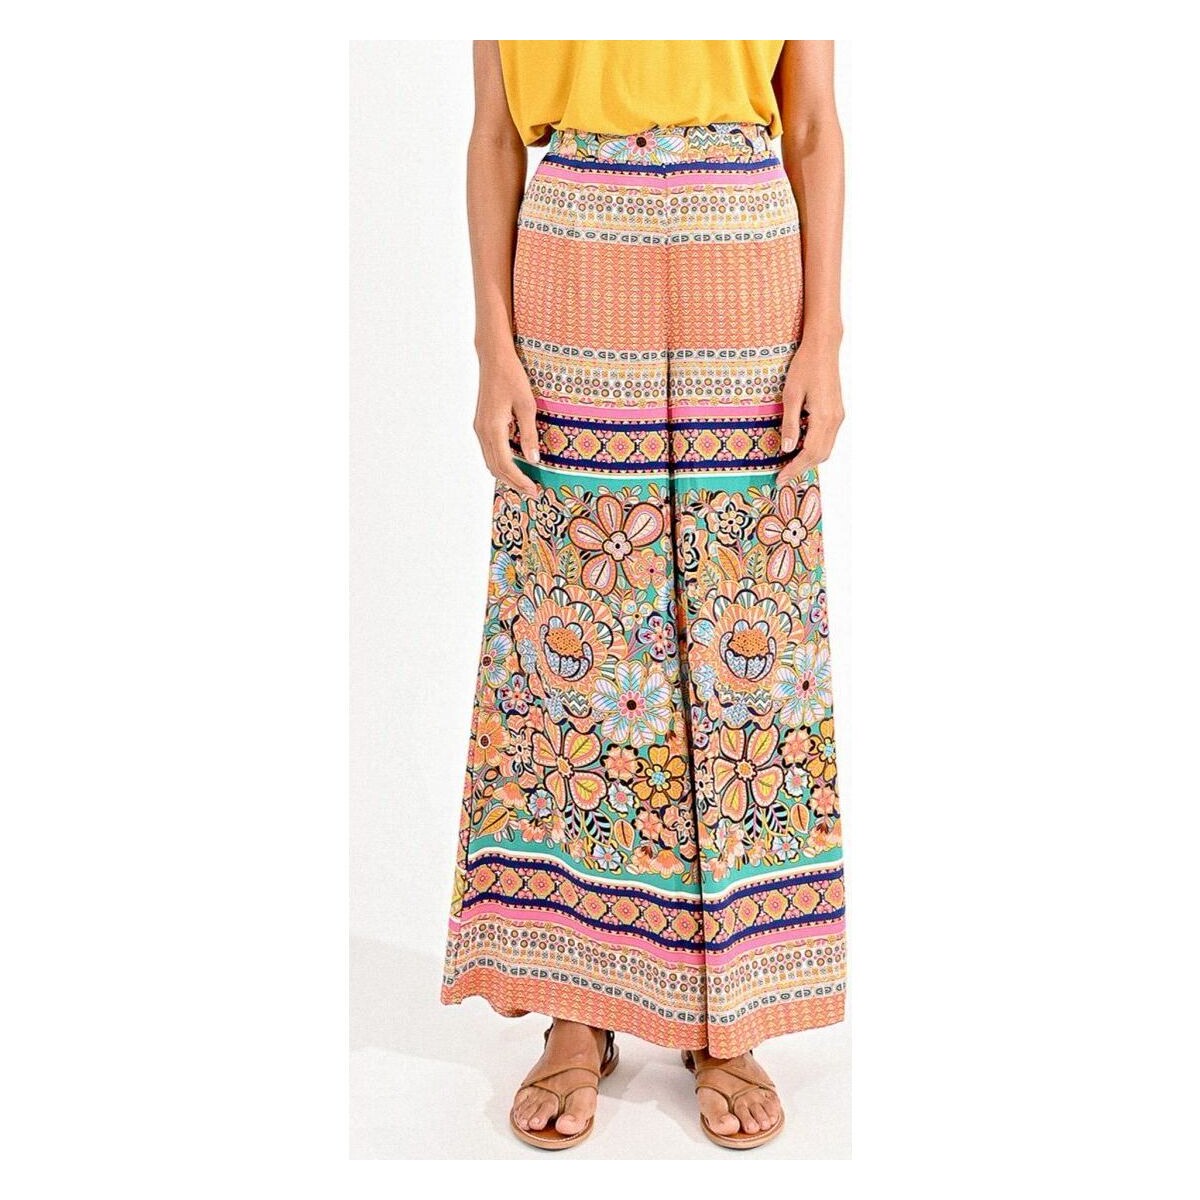 textil Mujer Pantalones Molly Bracken N183ACE-MULTICOLOR multicolore